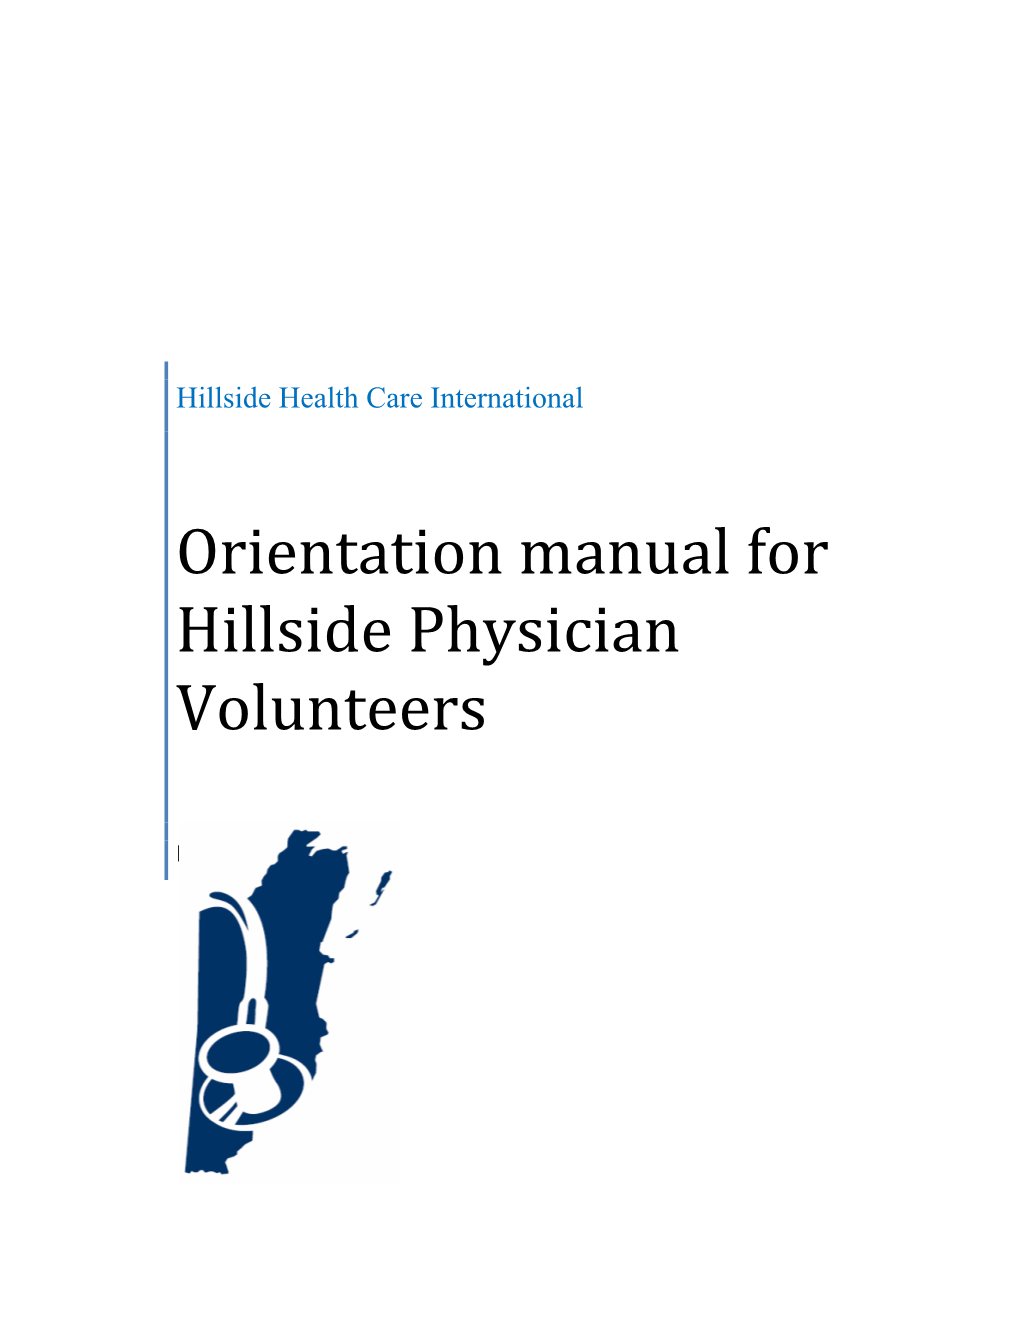 Orientation Manual for Hillside Physician Volunteers